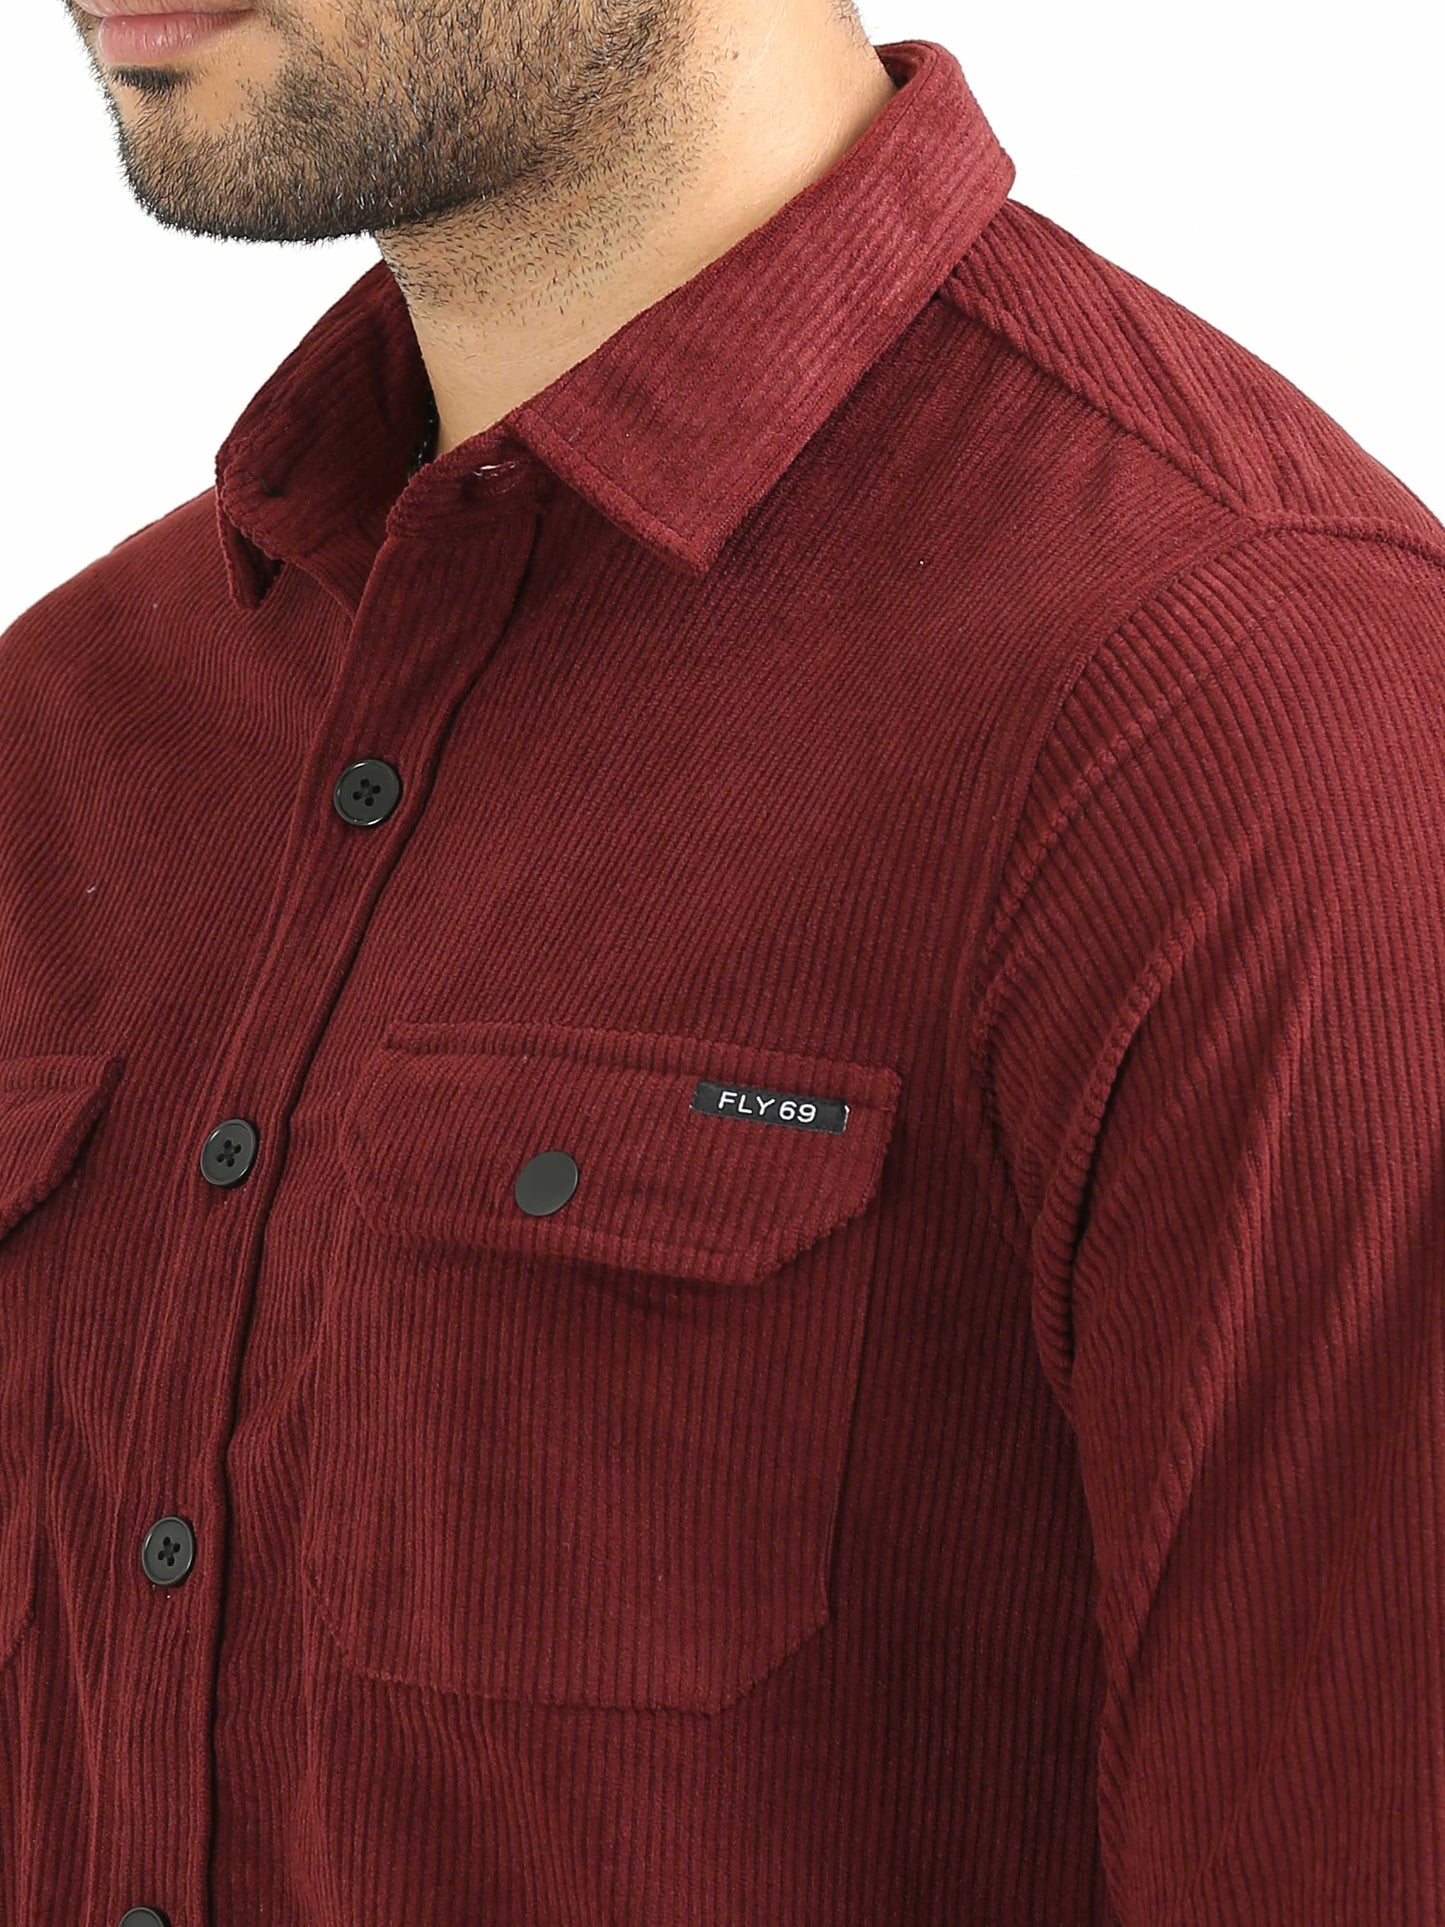 Maroon Red Corduroy Shirt